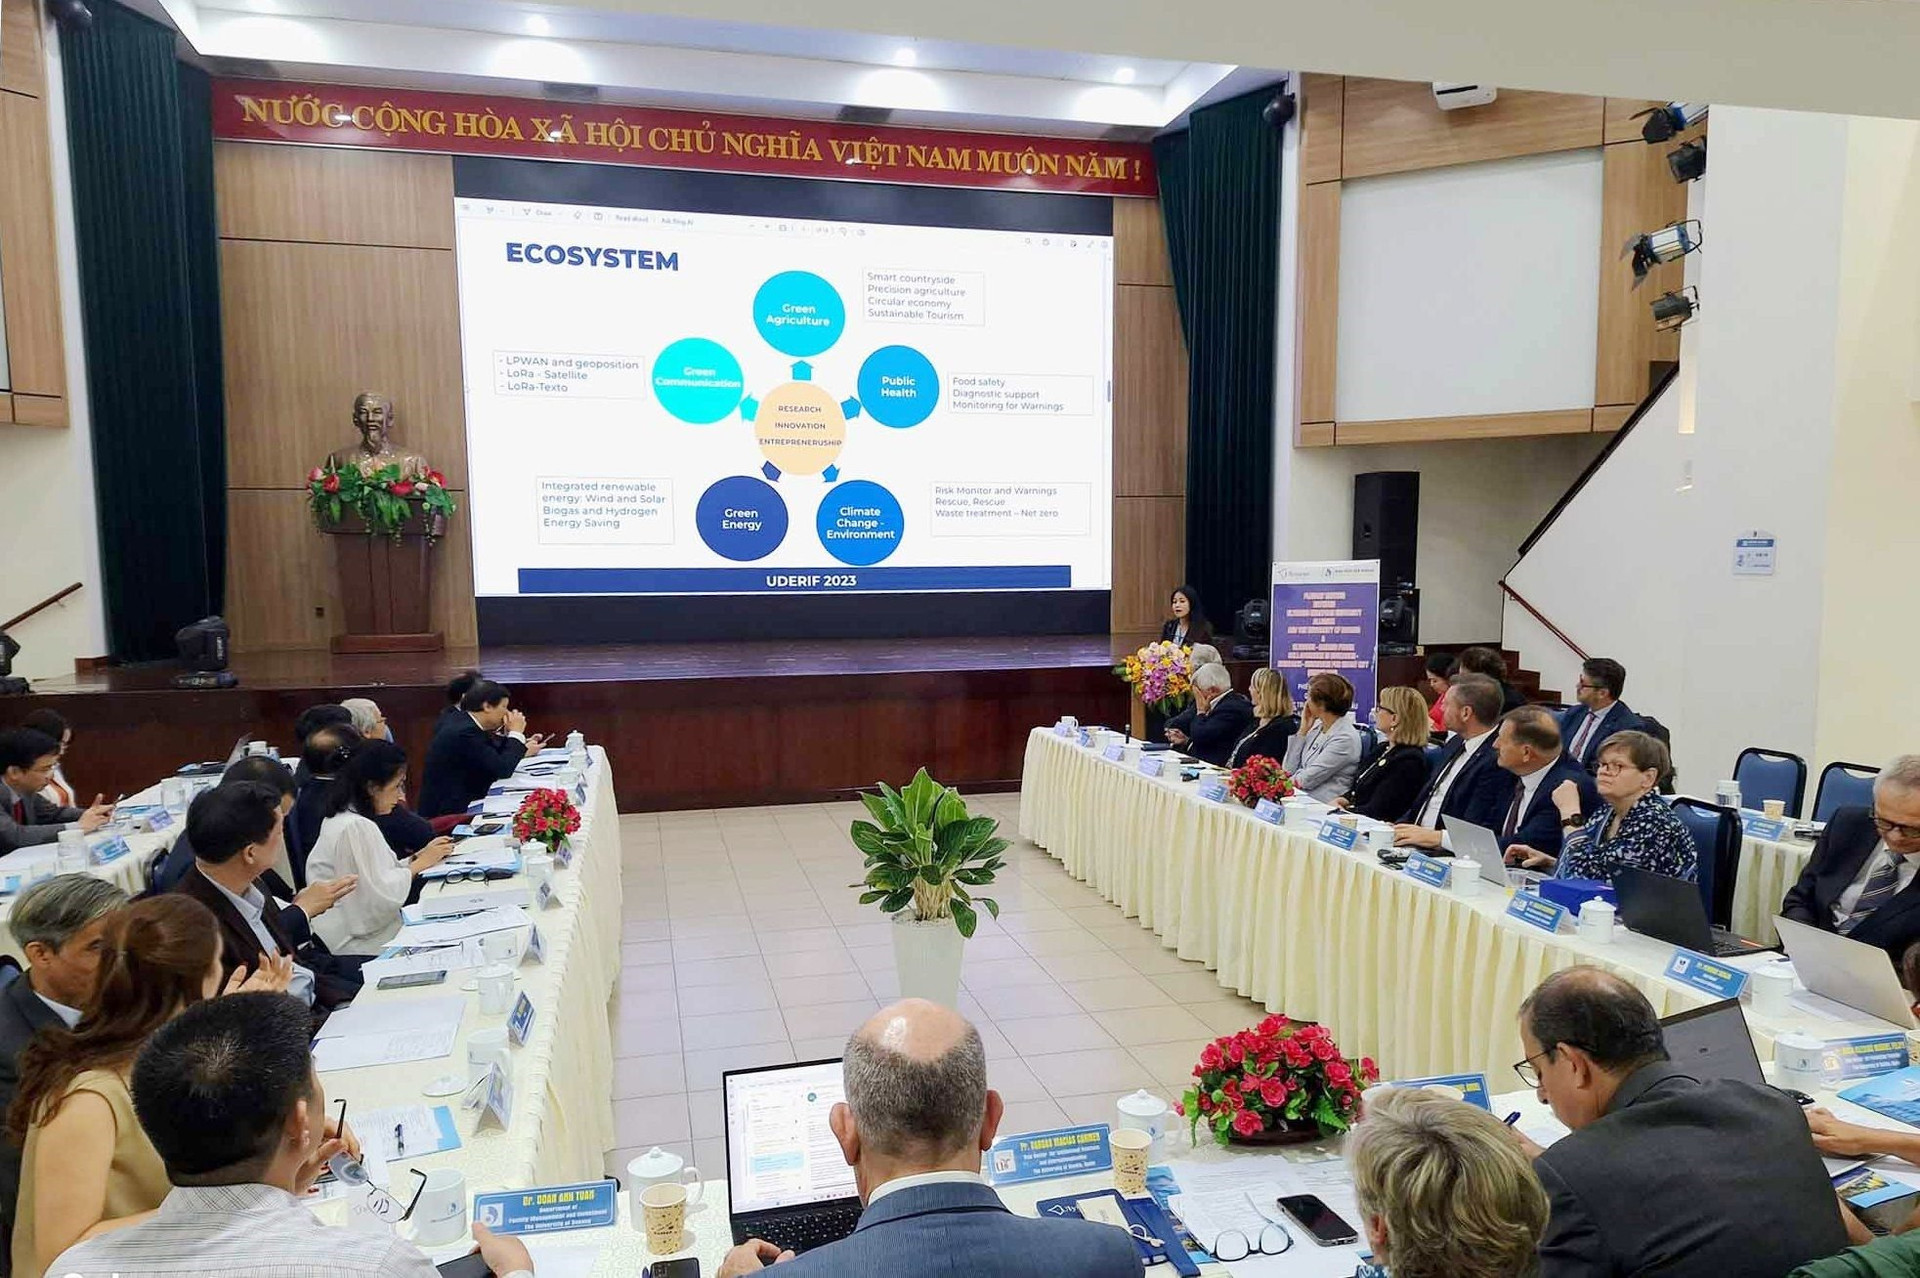 Plenary session between the Ulysseus Alliance and Da Nang University.